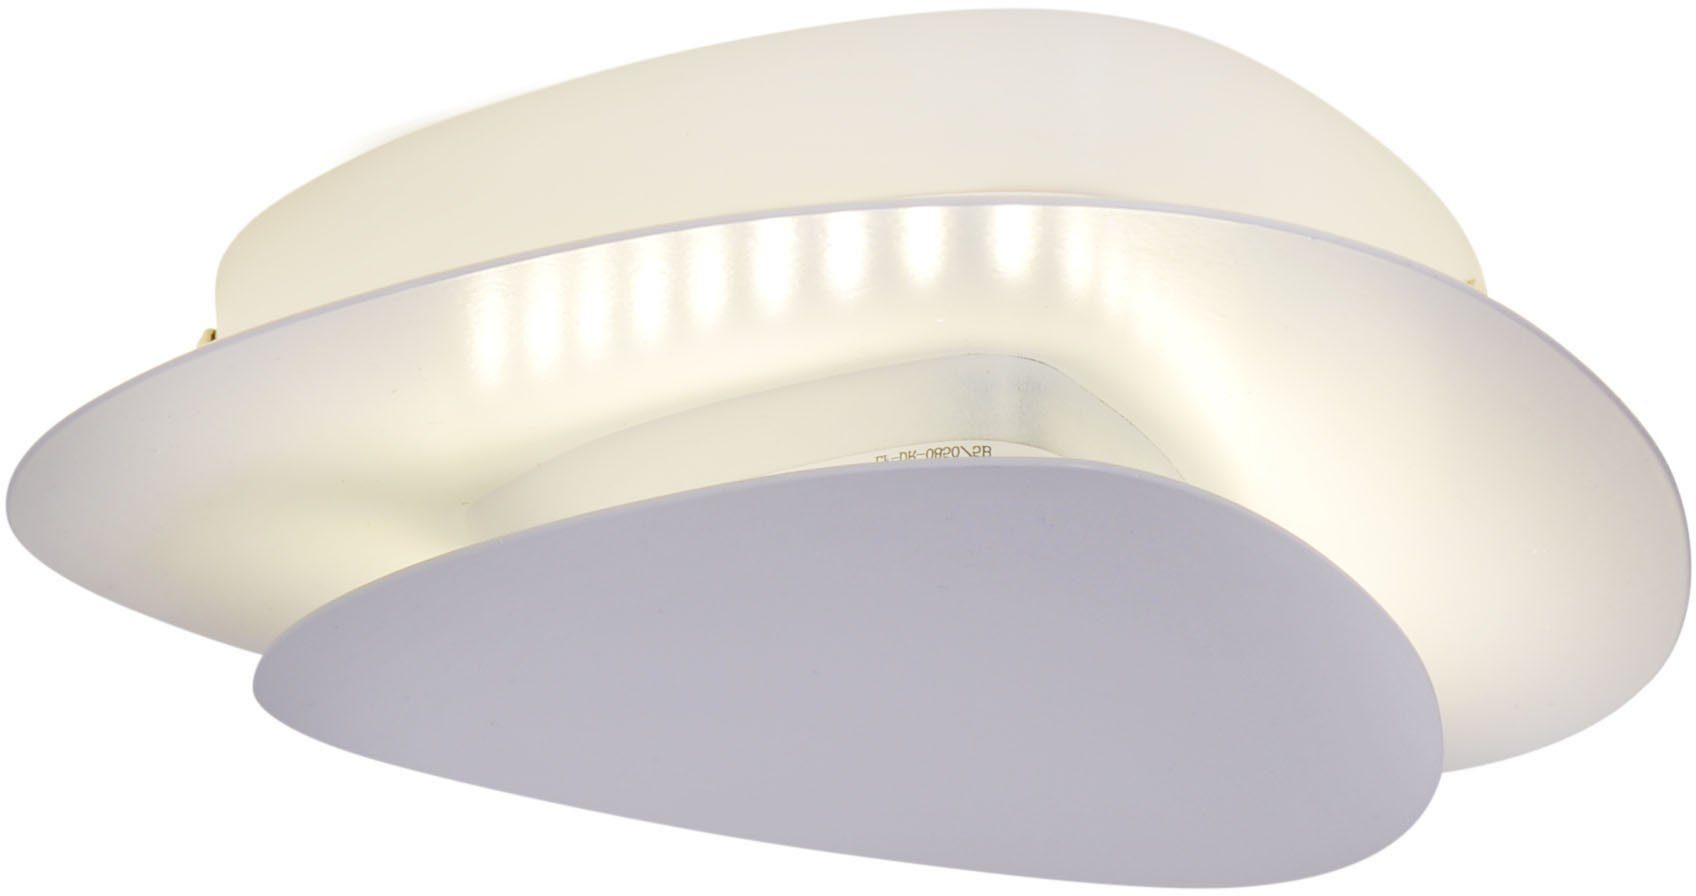 näve LED Deckenleuchte Liso, G, integriert, Metall, Treiber, Farbe: LED Material: Energieeffizienzklasse incl. weiß fest Warmweiß